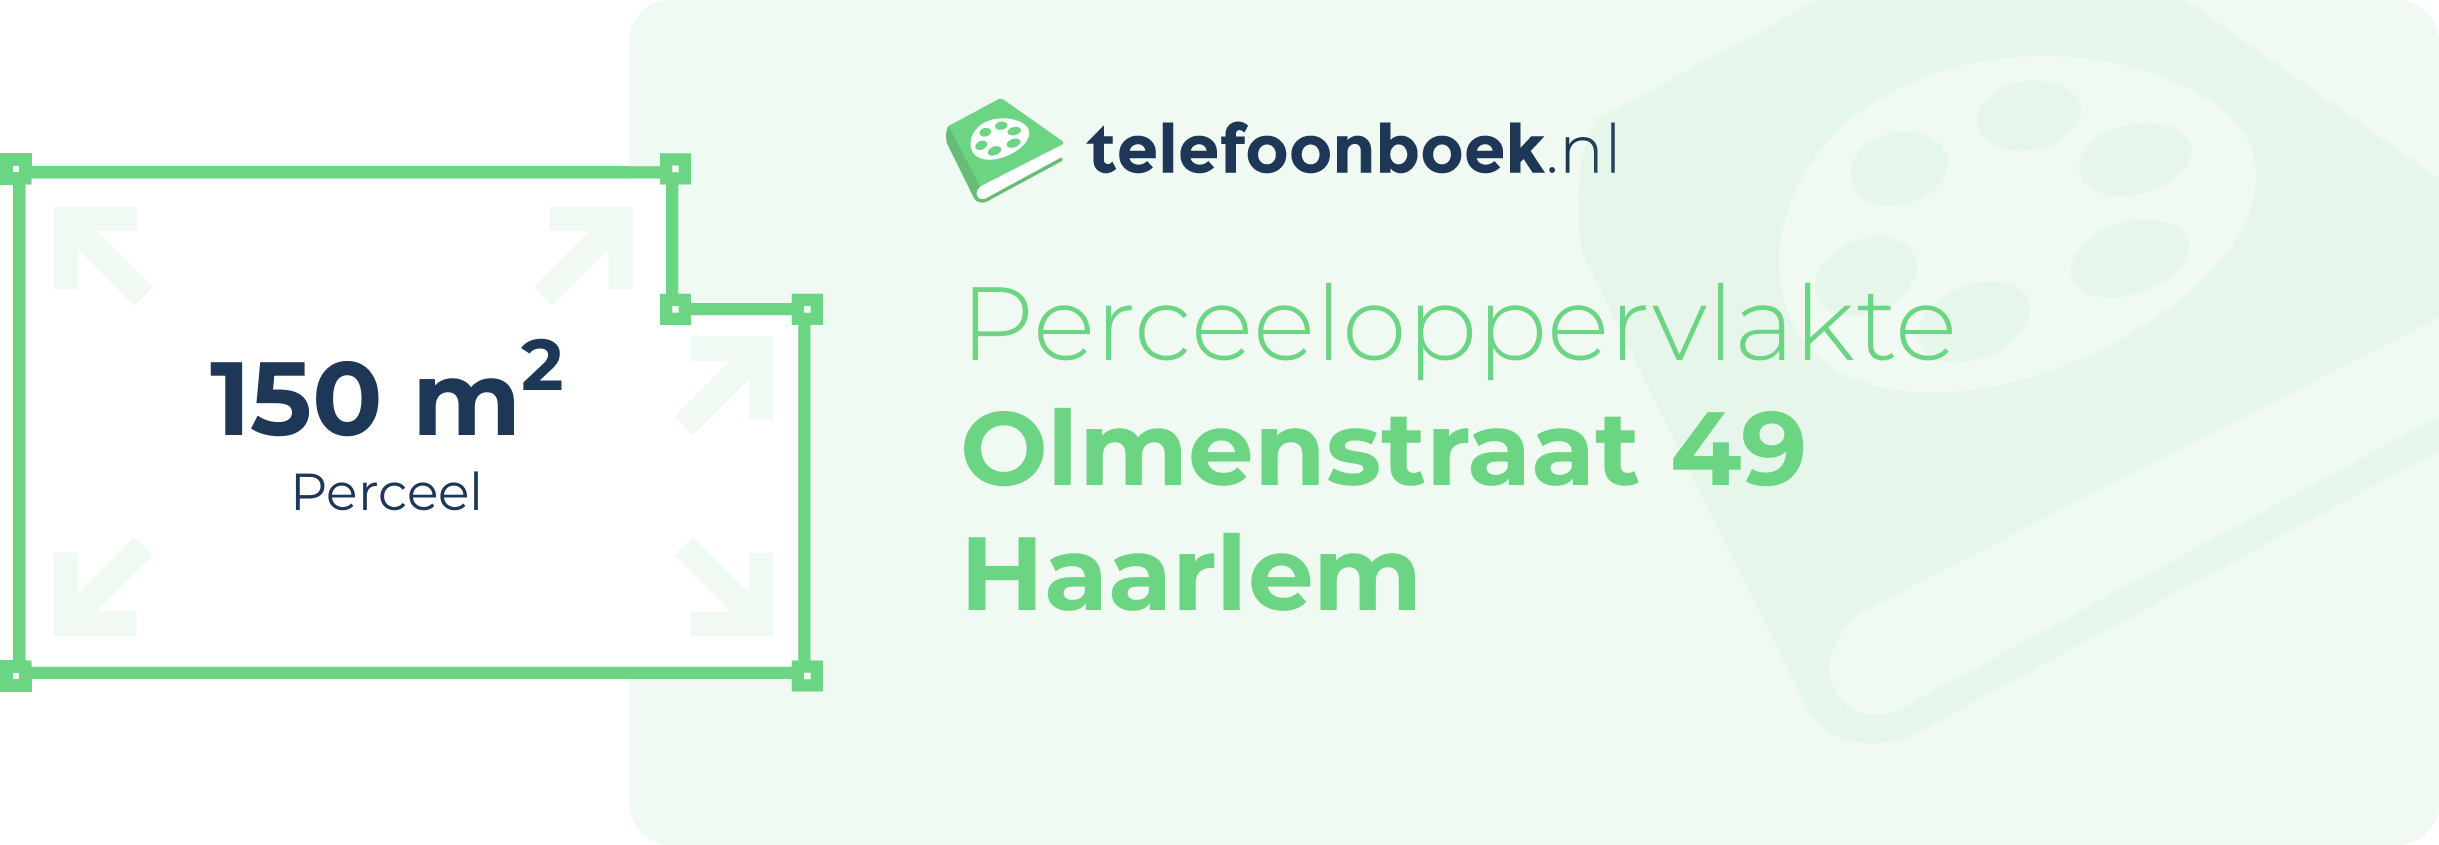 Perceeloppervlakte Olmenstraat 49 Haarlem